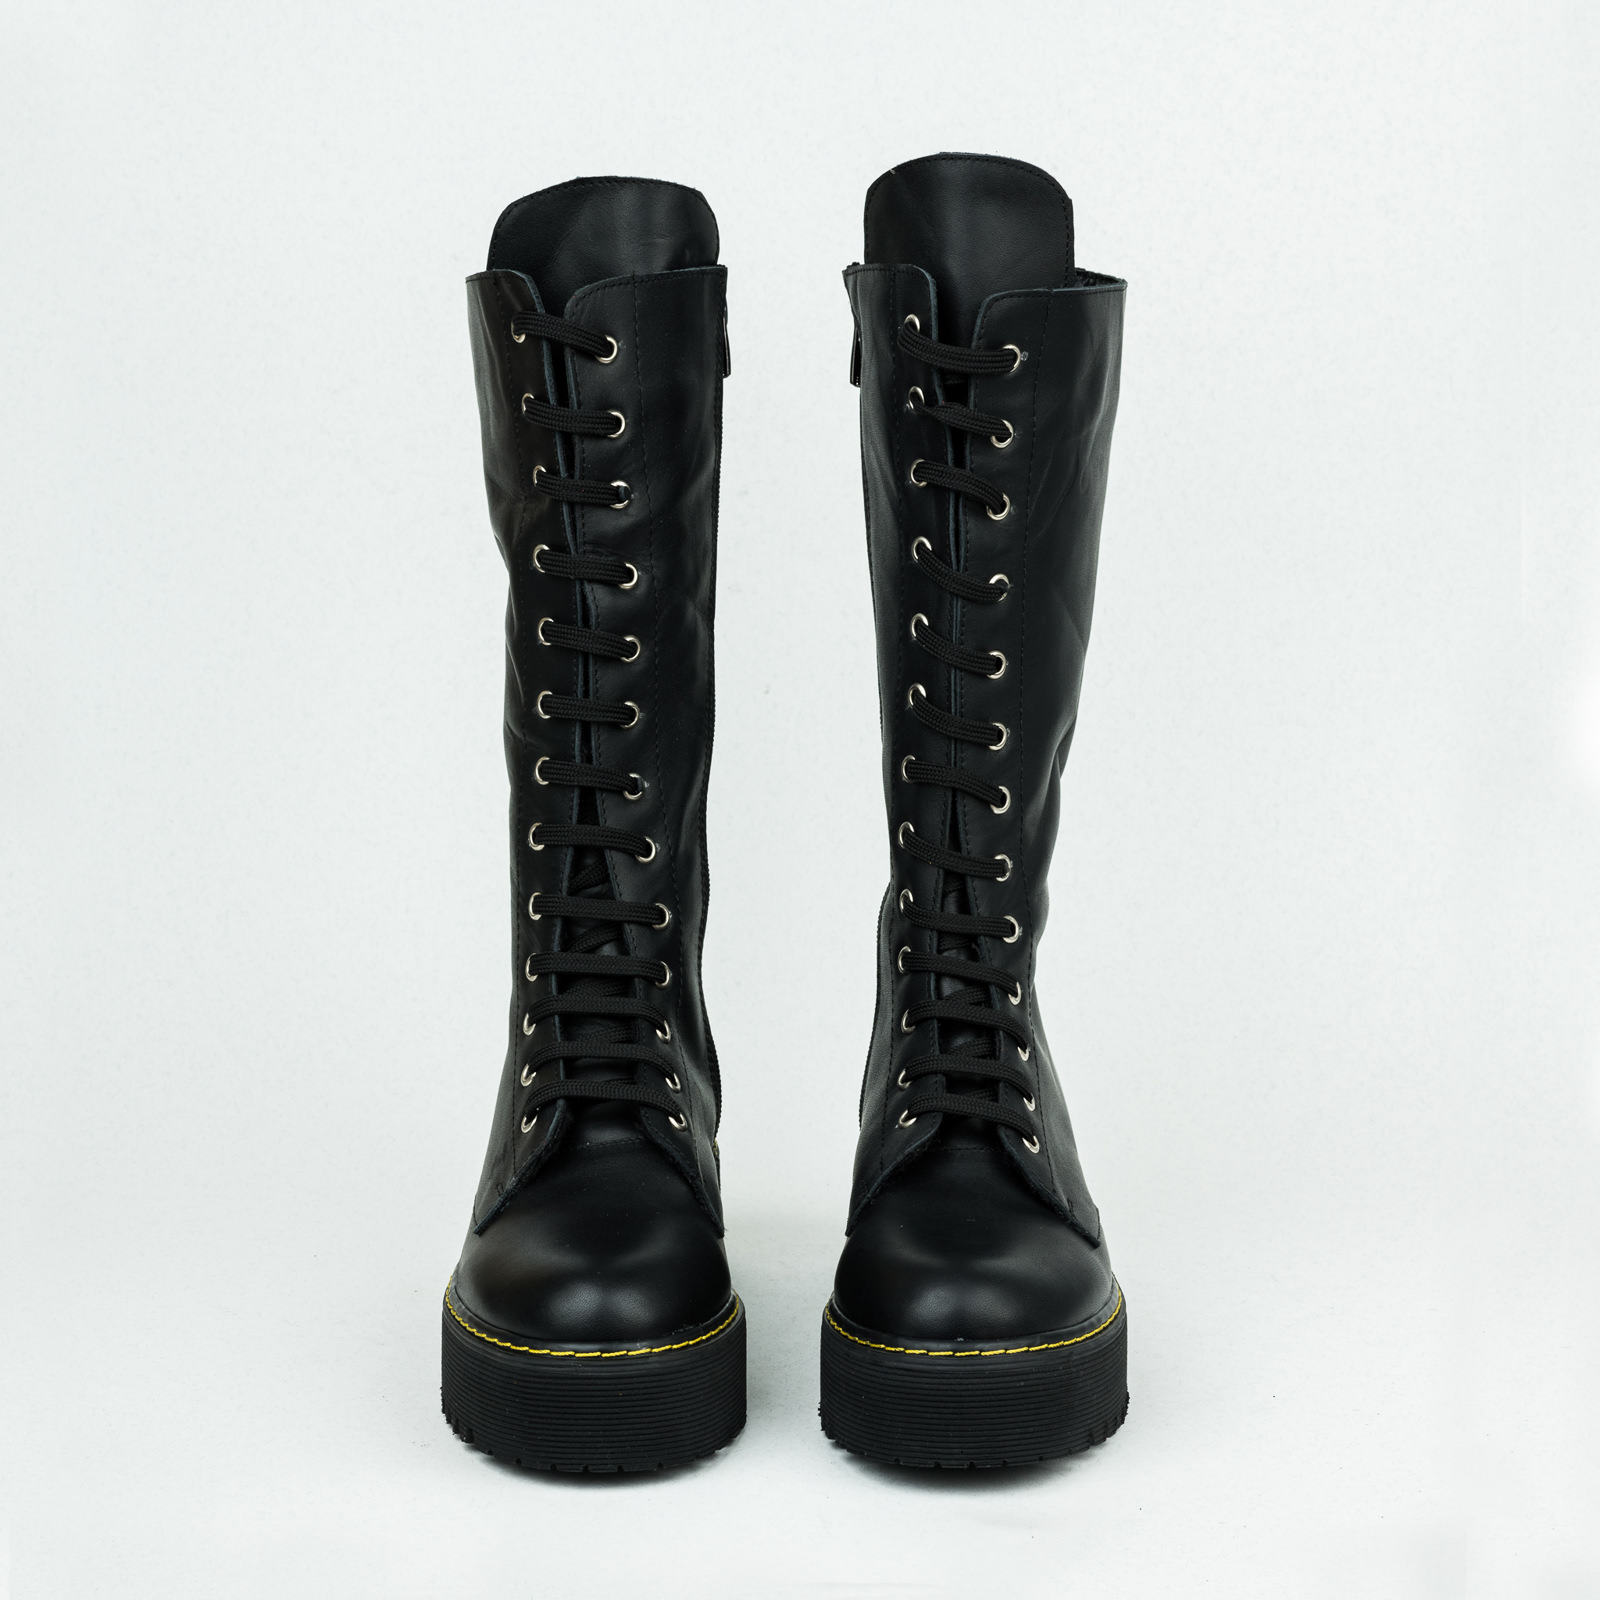 Leather WATERPROOF boots B151 - BLACK